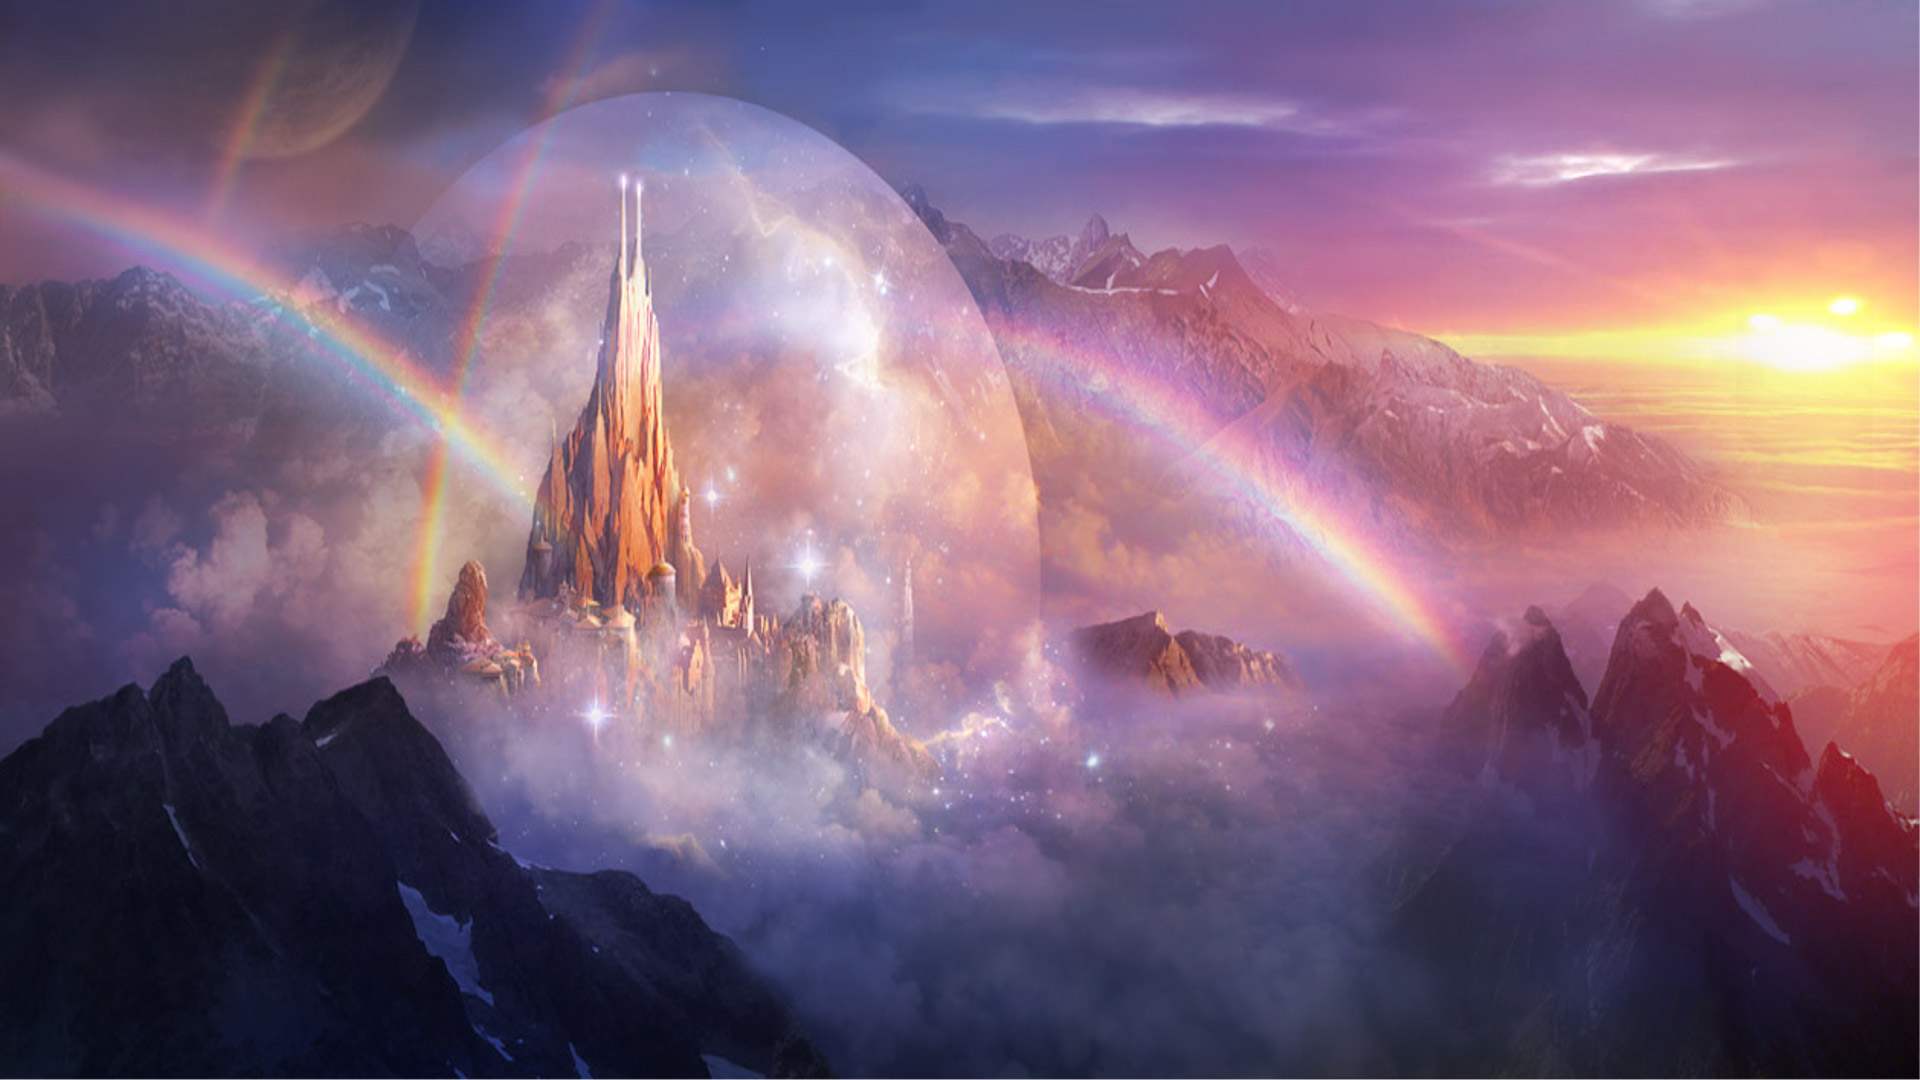 landscapes, castles, fantasy art, rainbows, Philip Straub - desktop wallpaper